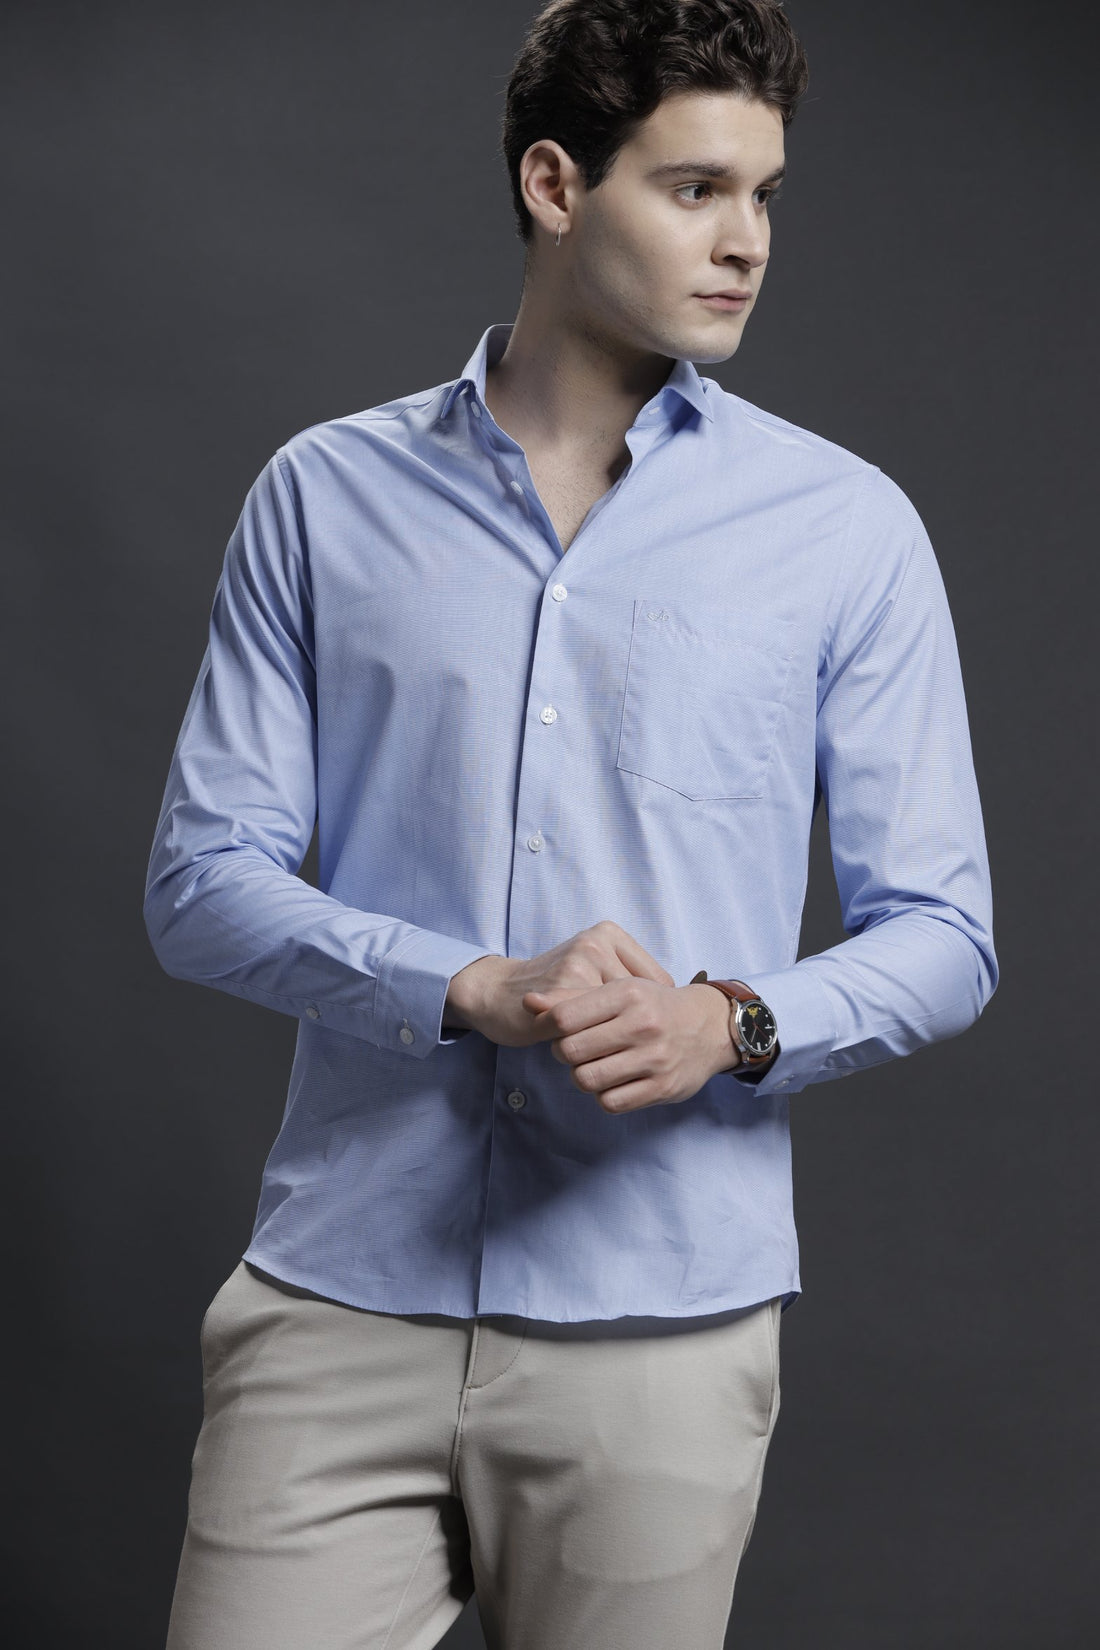 Solid Light Blue Formal Oxford Cotton Shirt